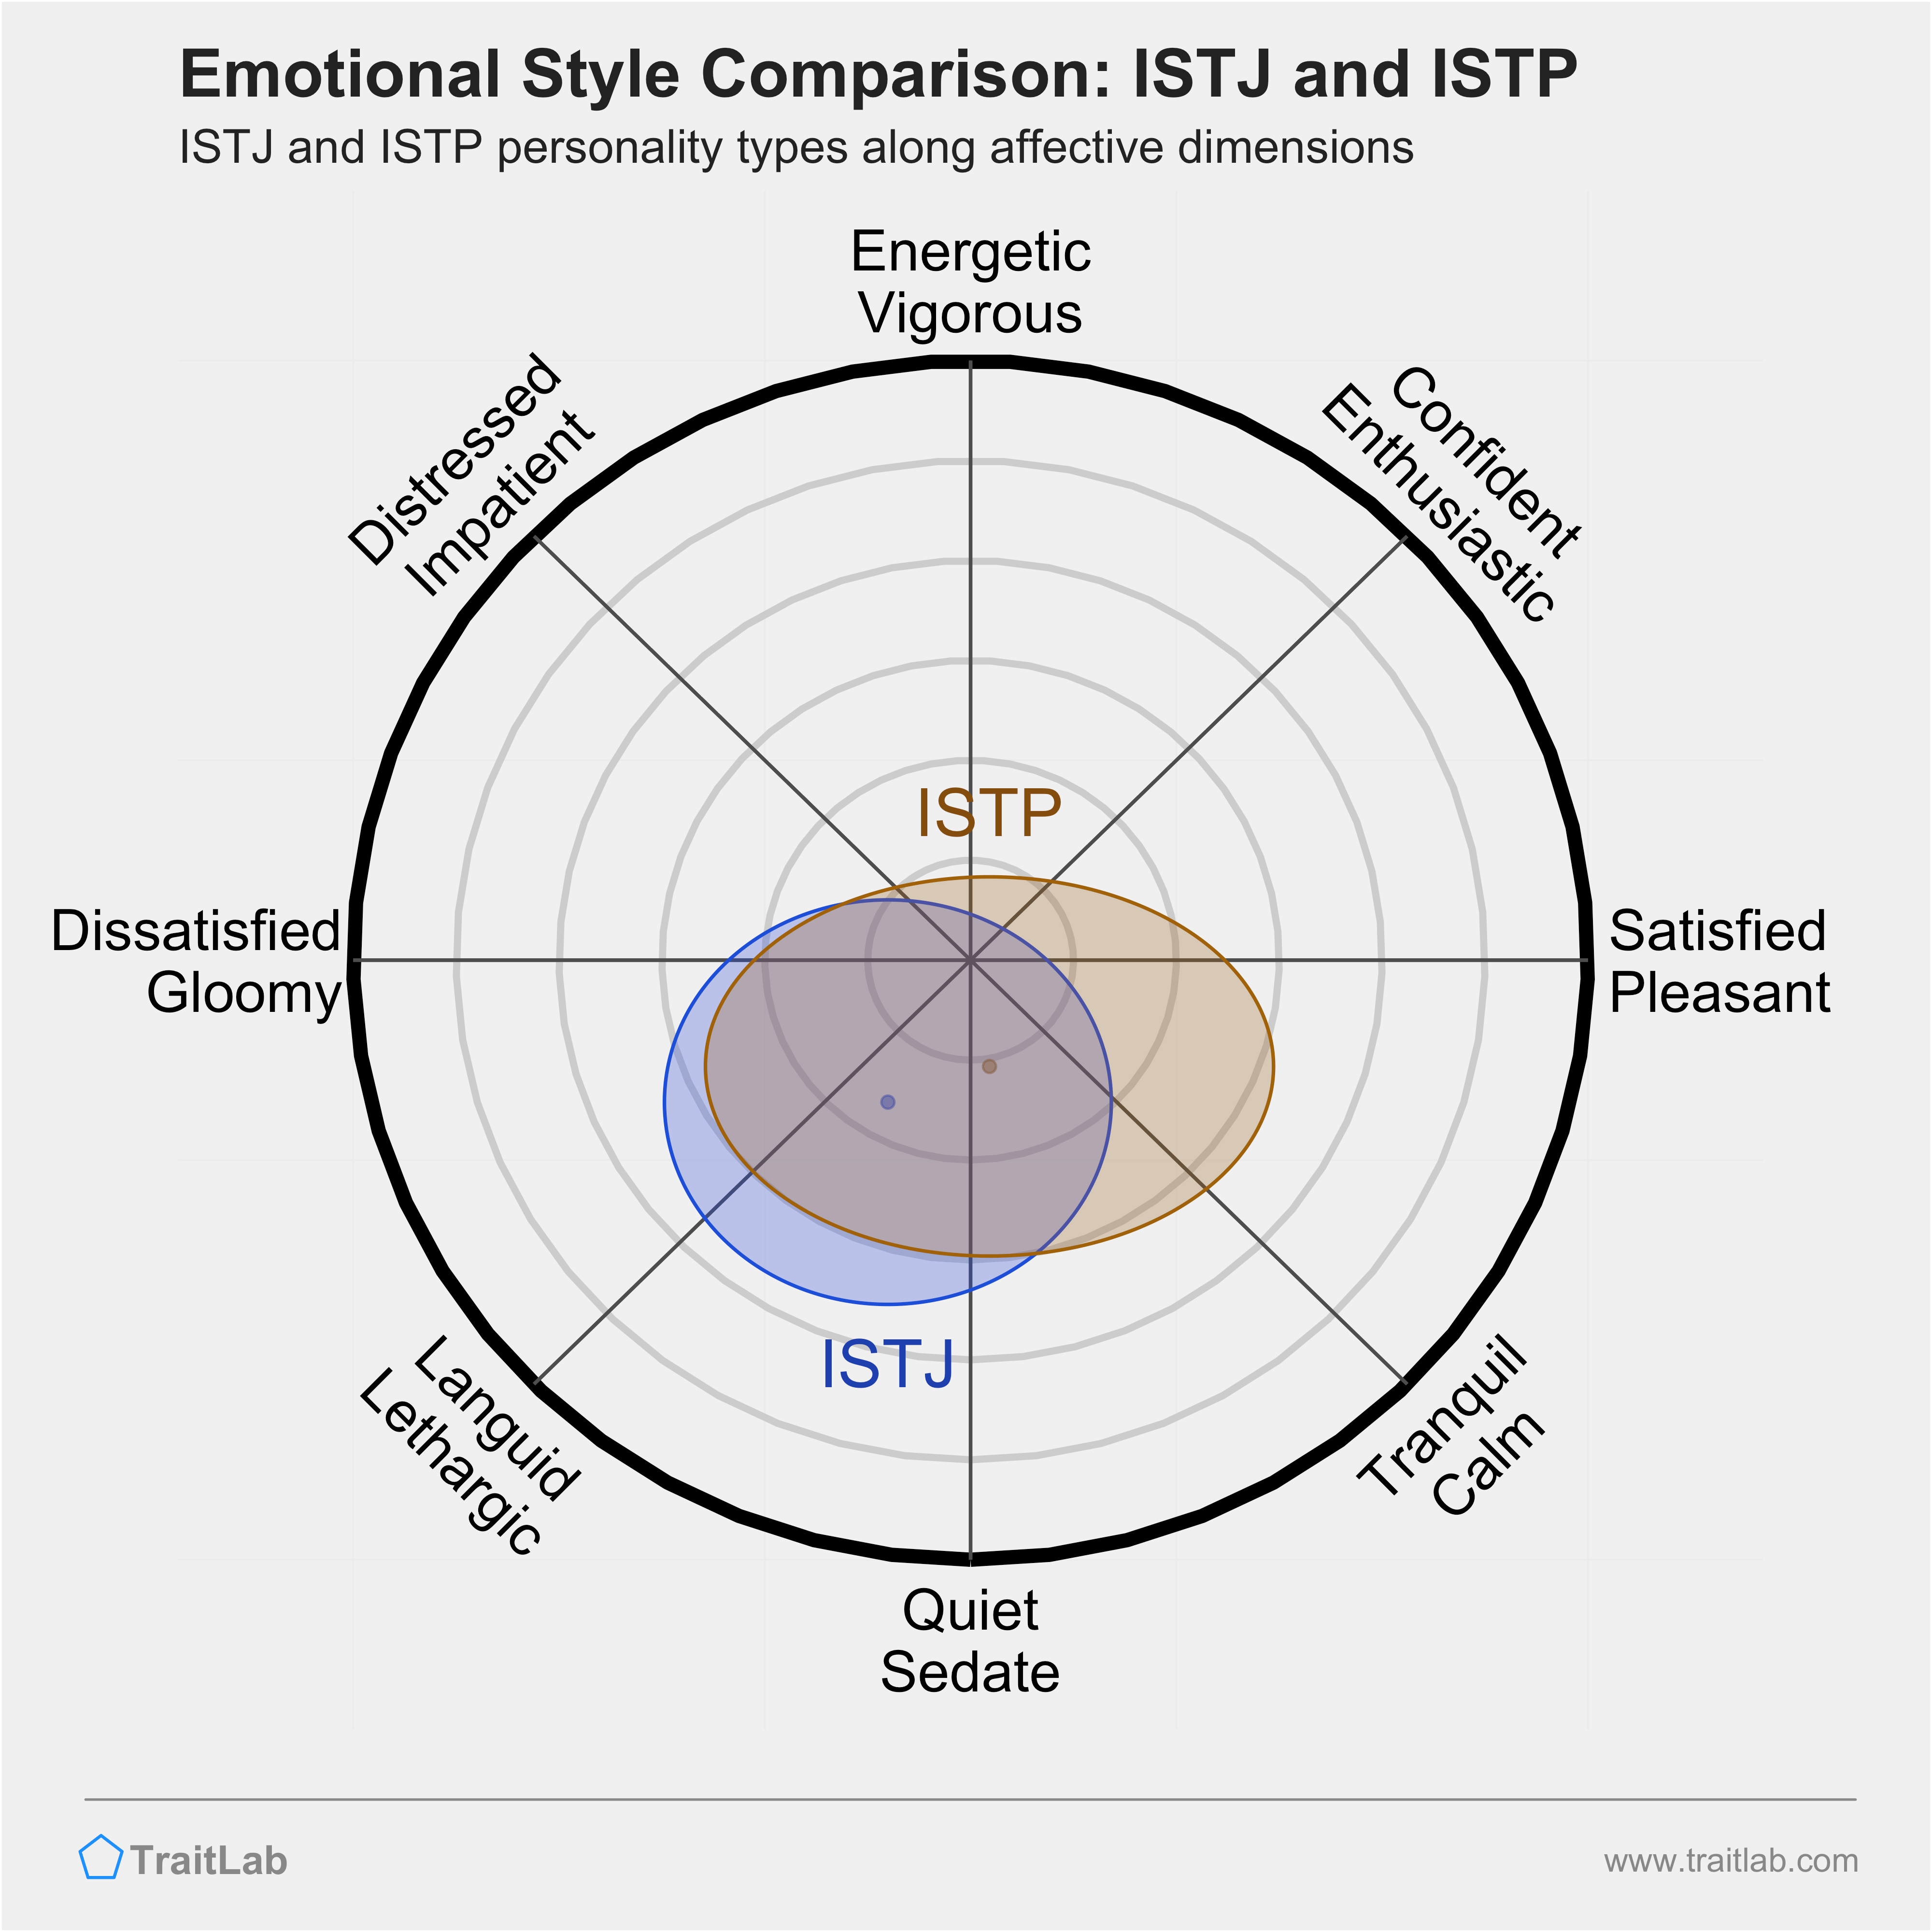 Gerome MBTI Personality Type: ISTJ or ISTP?